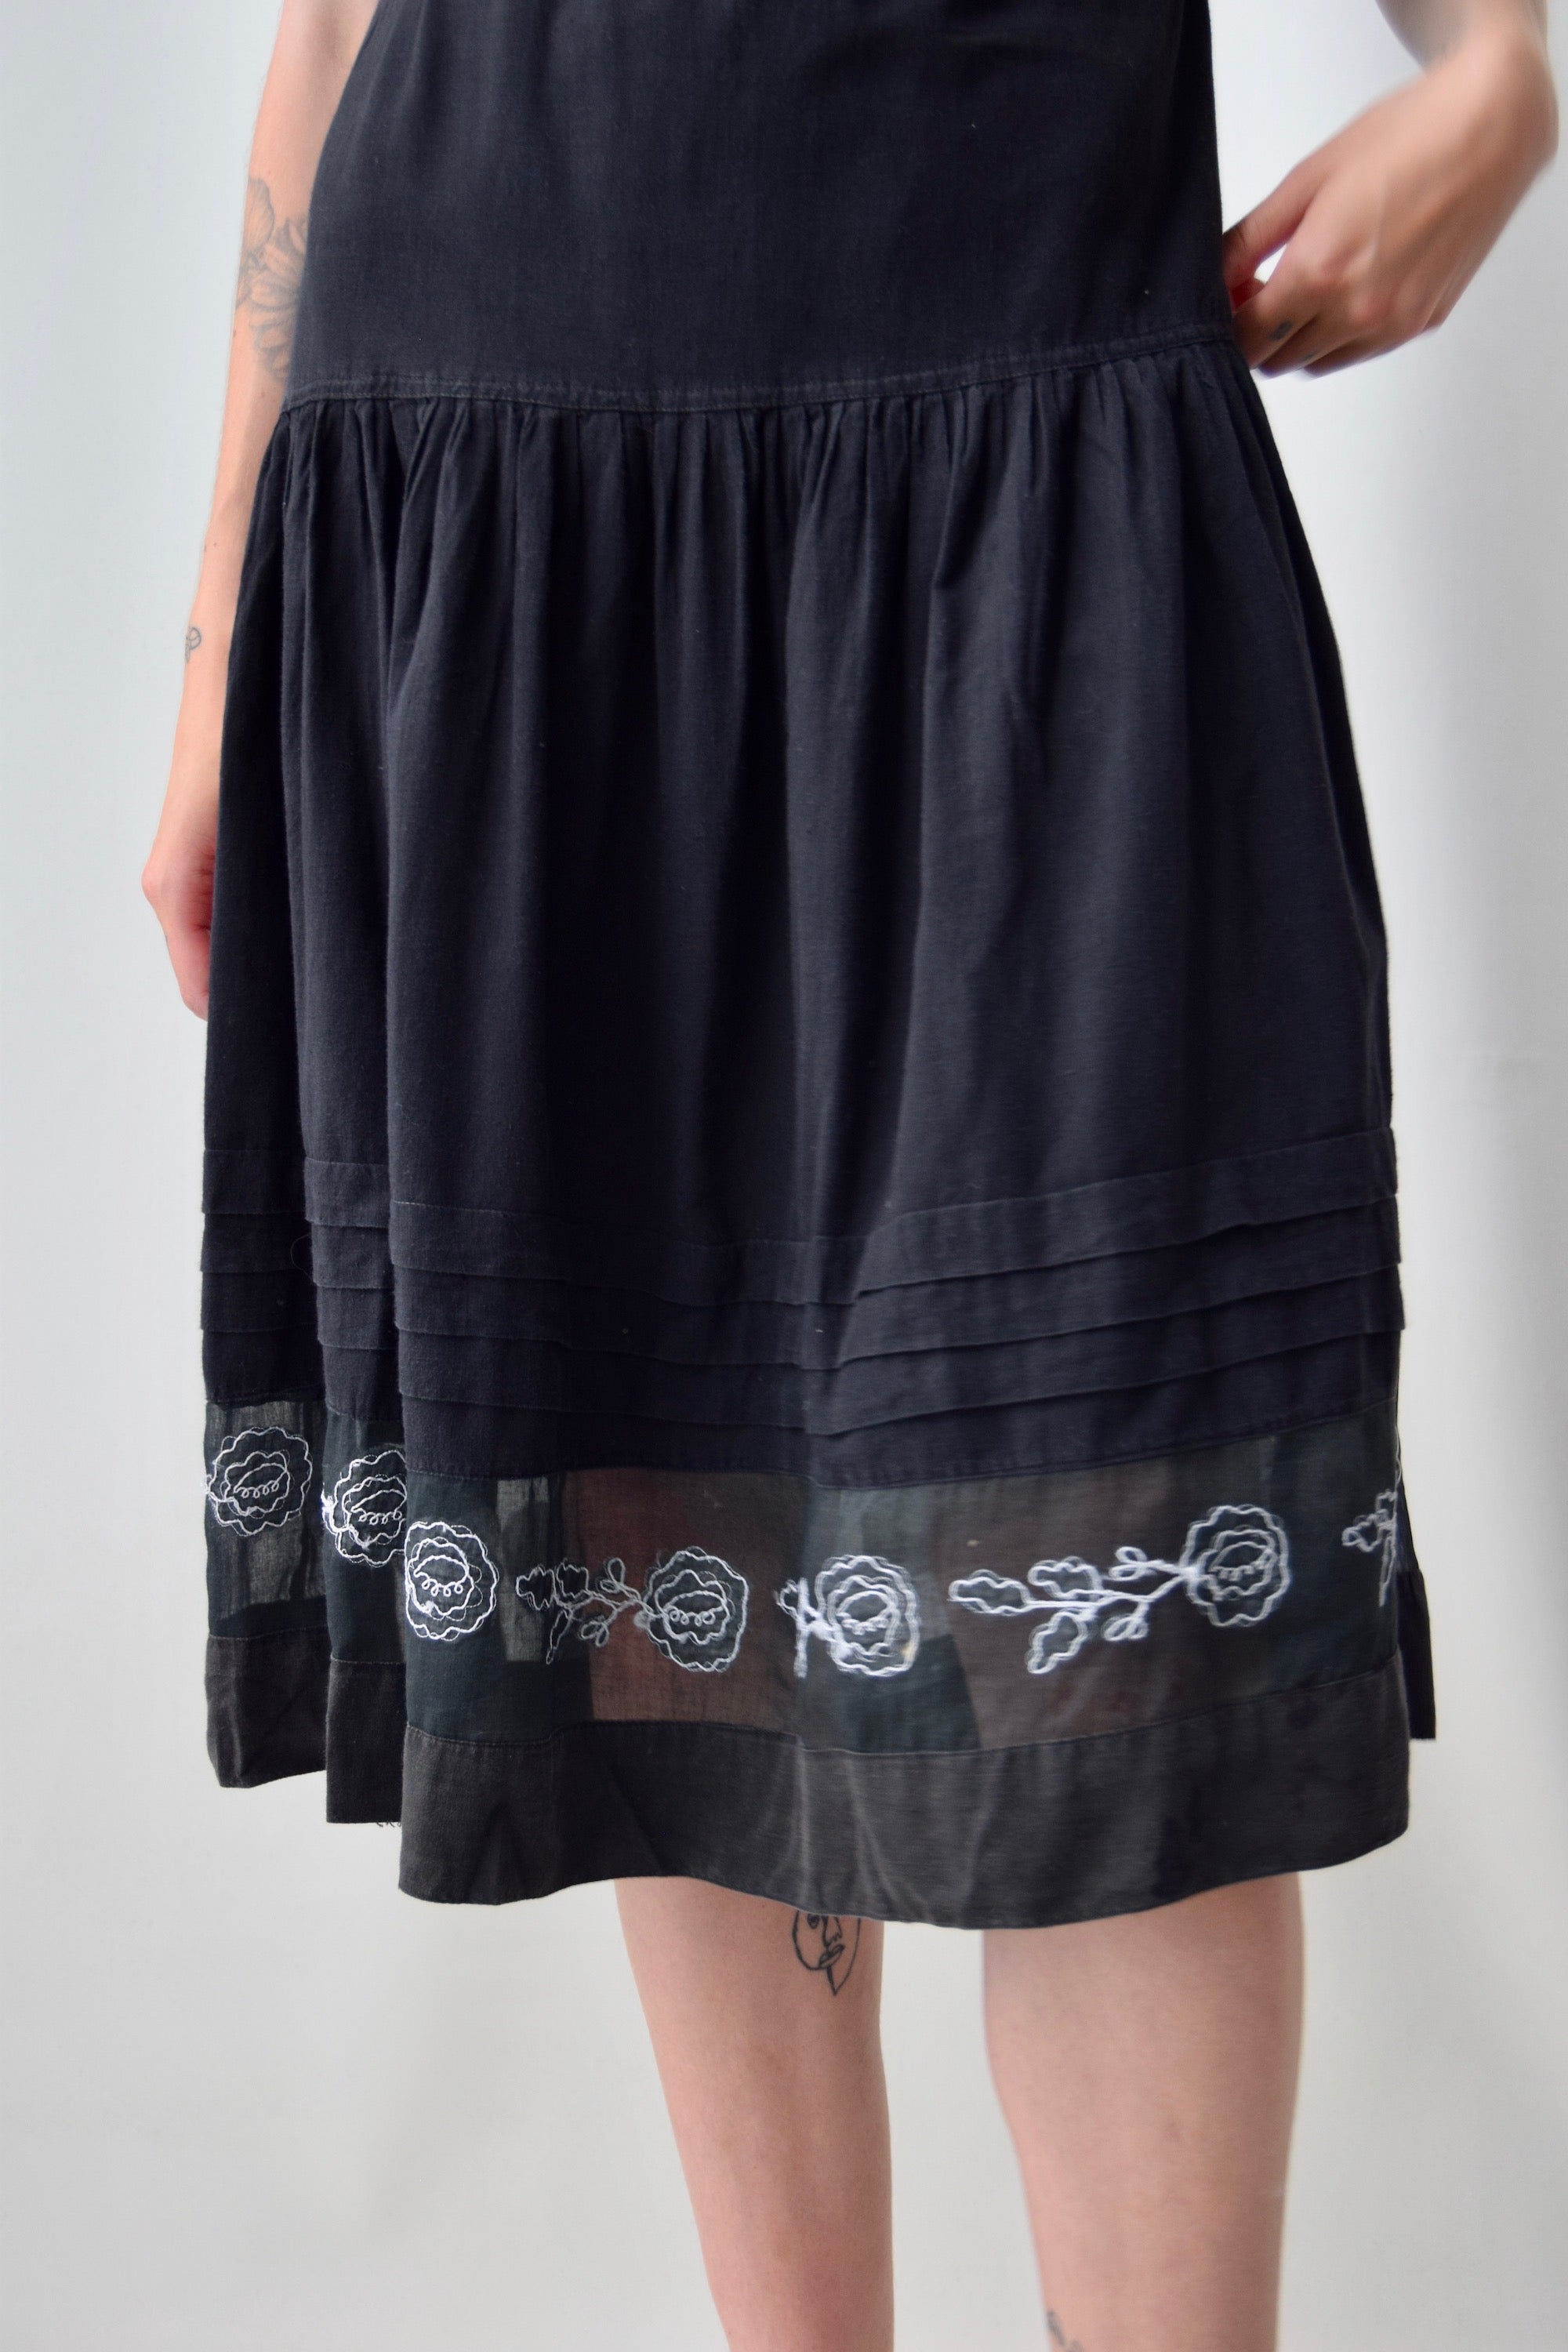 80's Indian Cotton Black Summer Dress